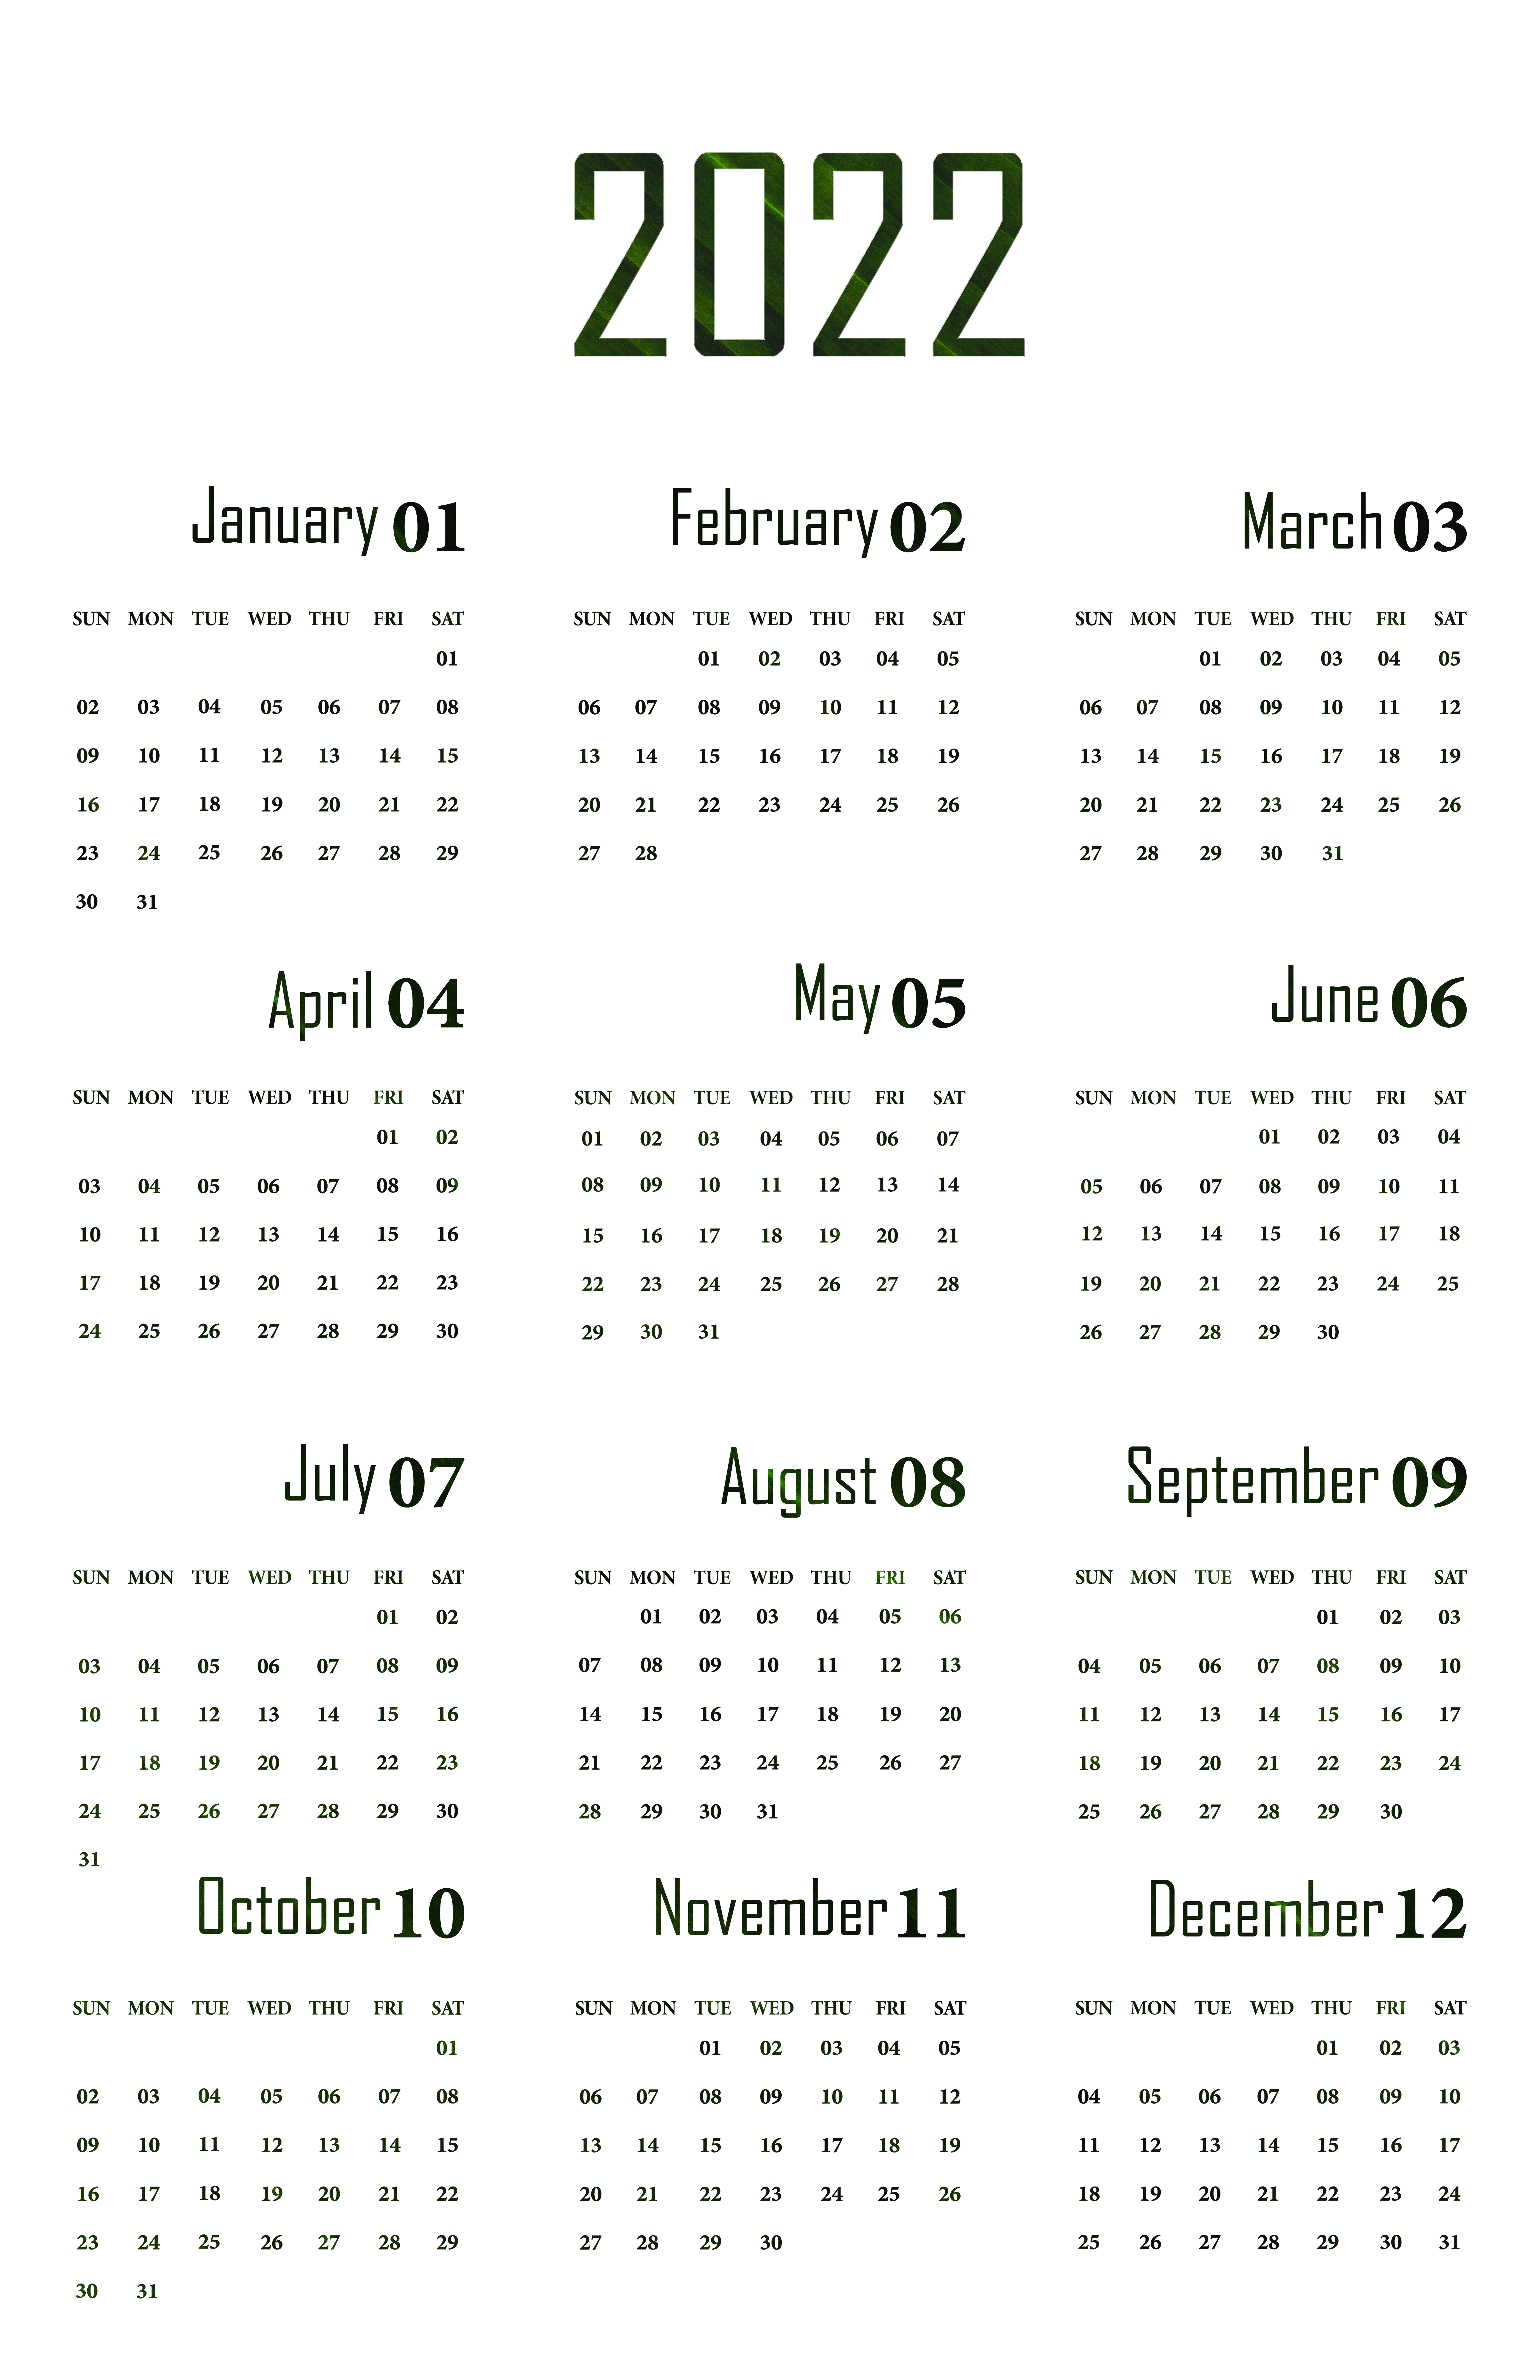 Calendario 2022 PNG Immagine Trasparente